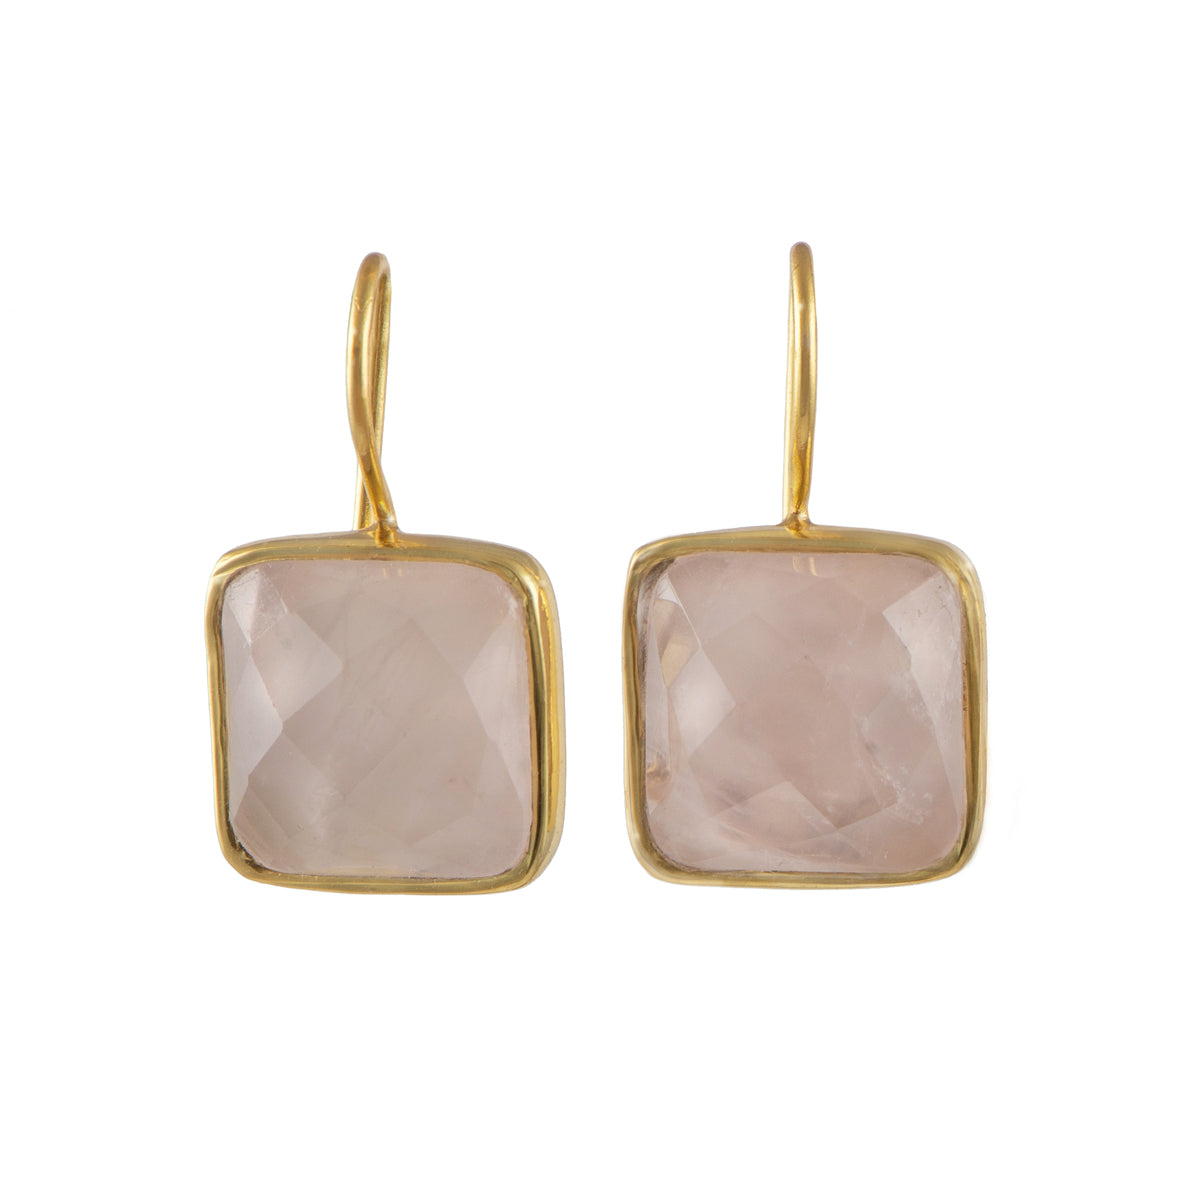 Gold Plated Sterling Silver Square Gemstone Earrings - Rose Quartz